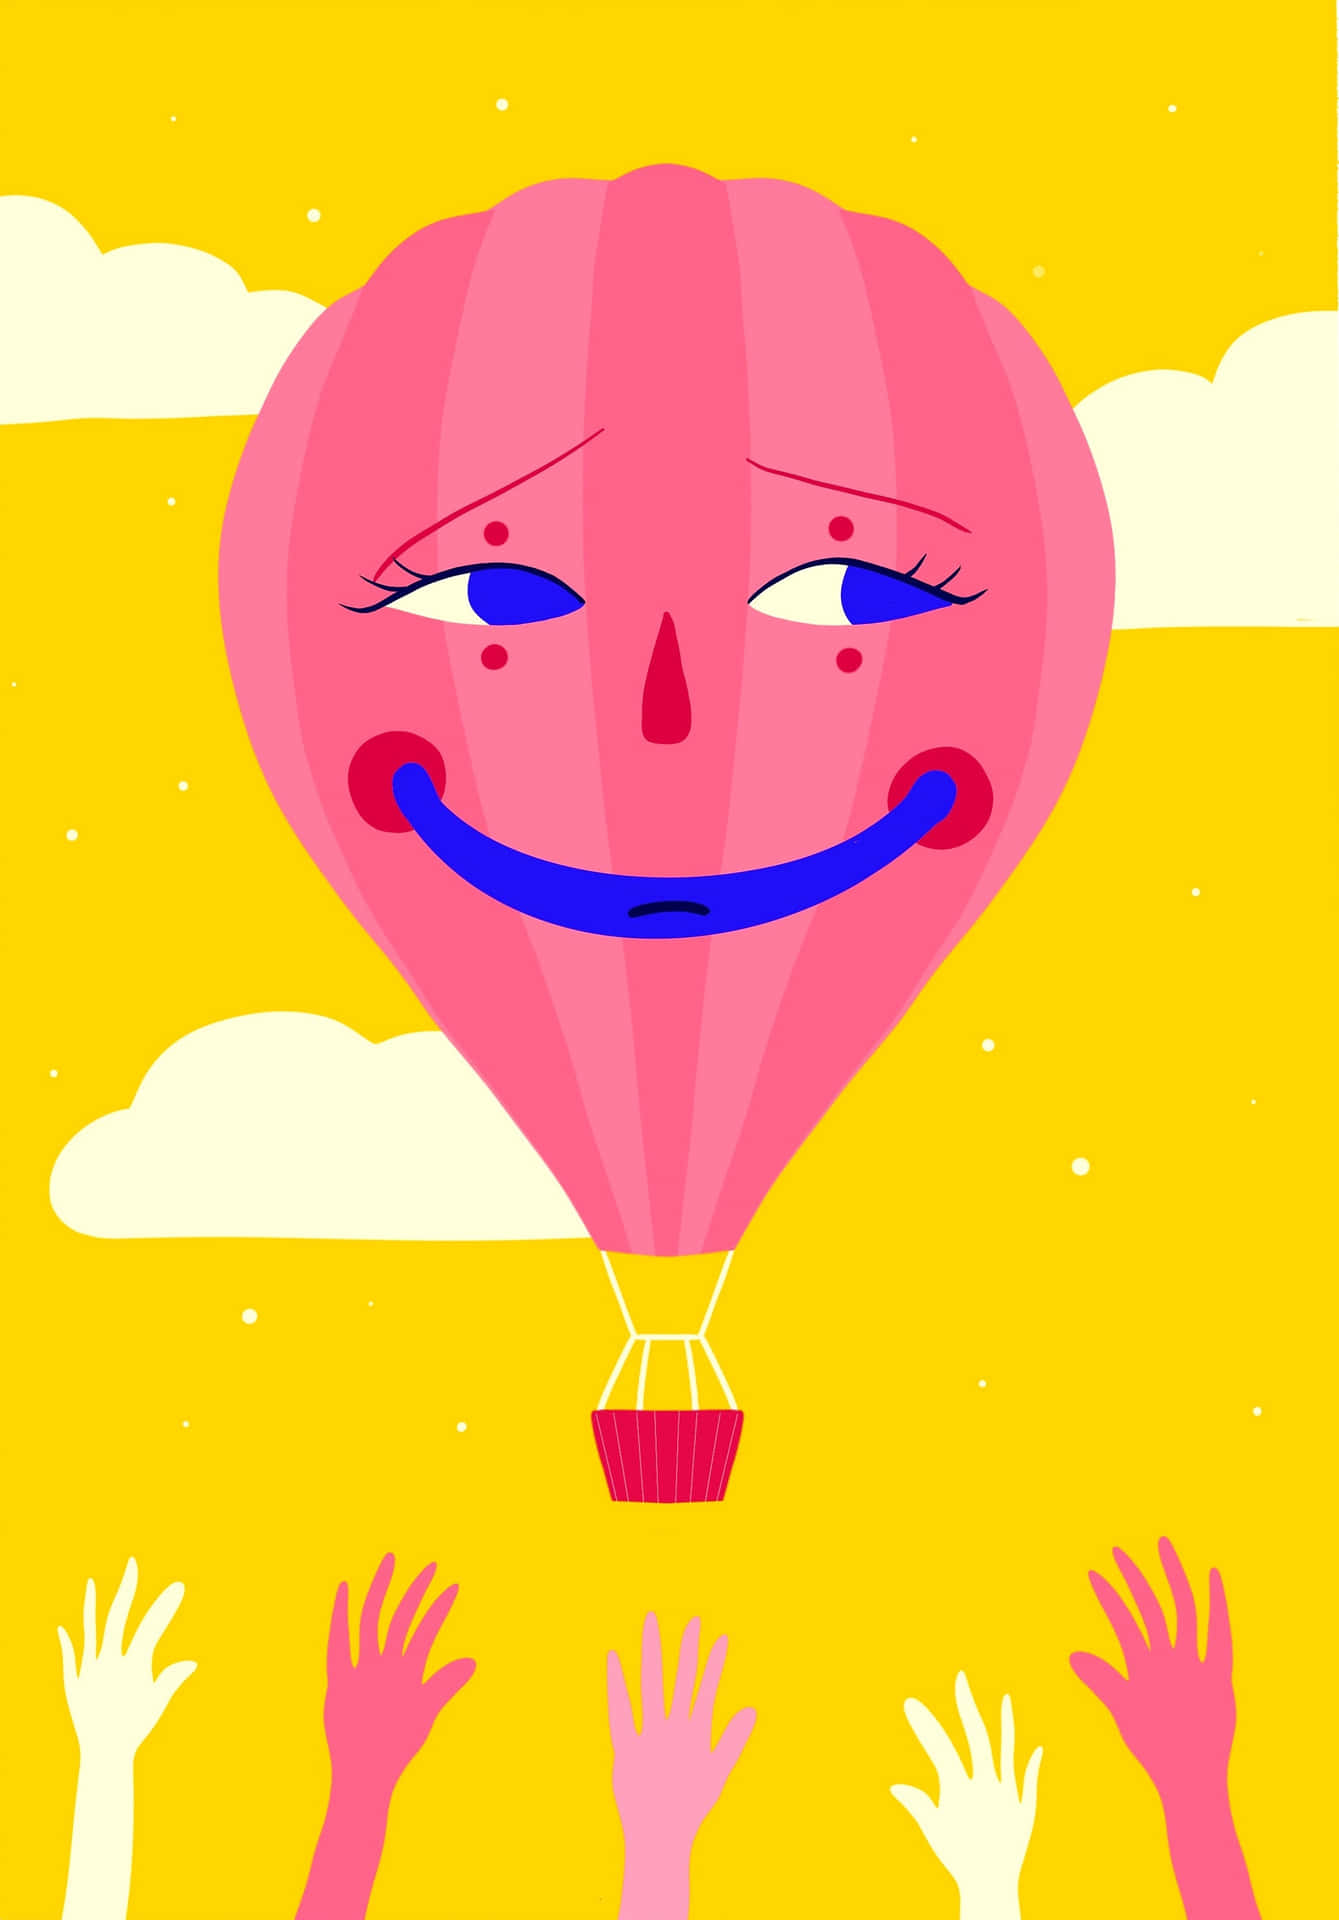 Enjoy the atmosphere aboard a hot air balloon ride